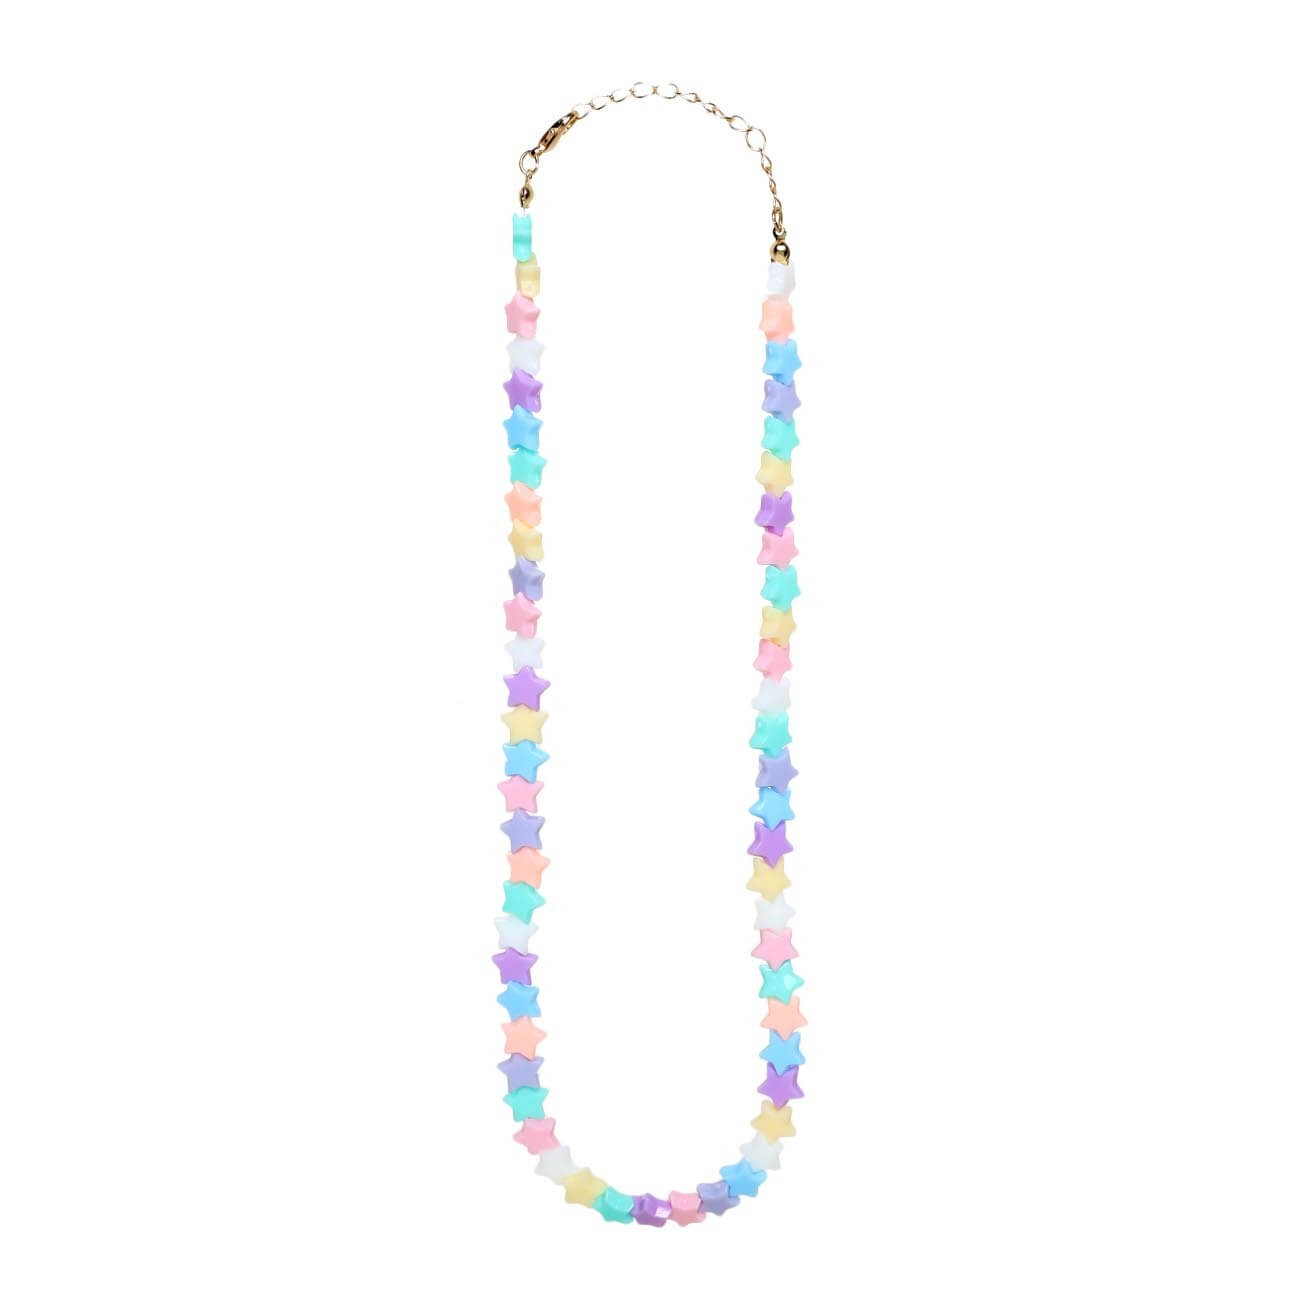 Chain, 24 cm, Children's, plastic, color, Stars, Jewelry изображение № 1